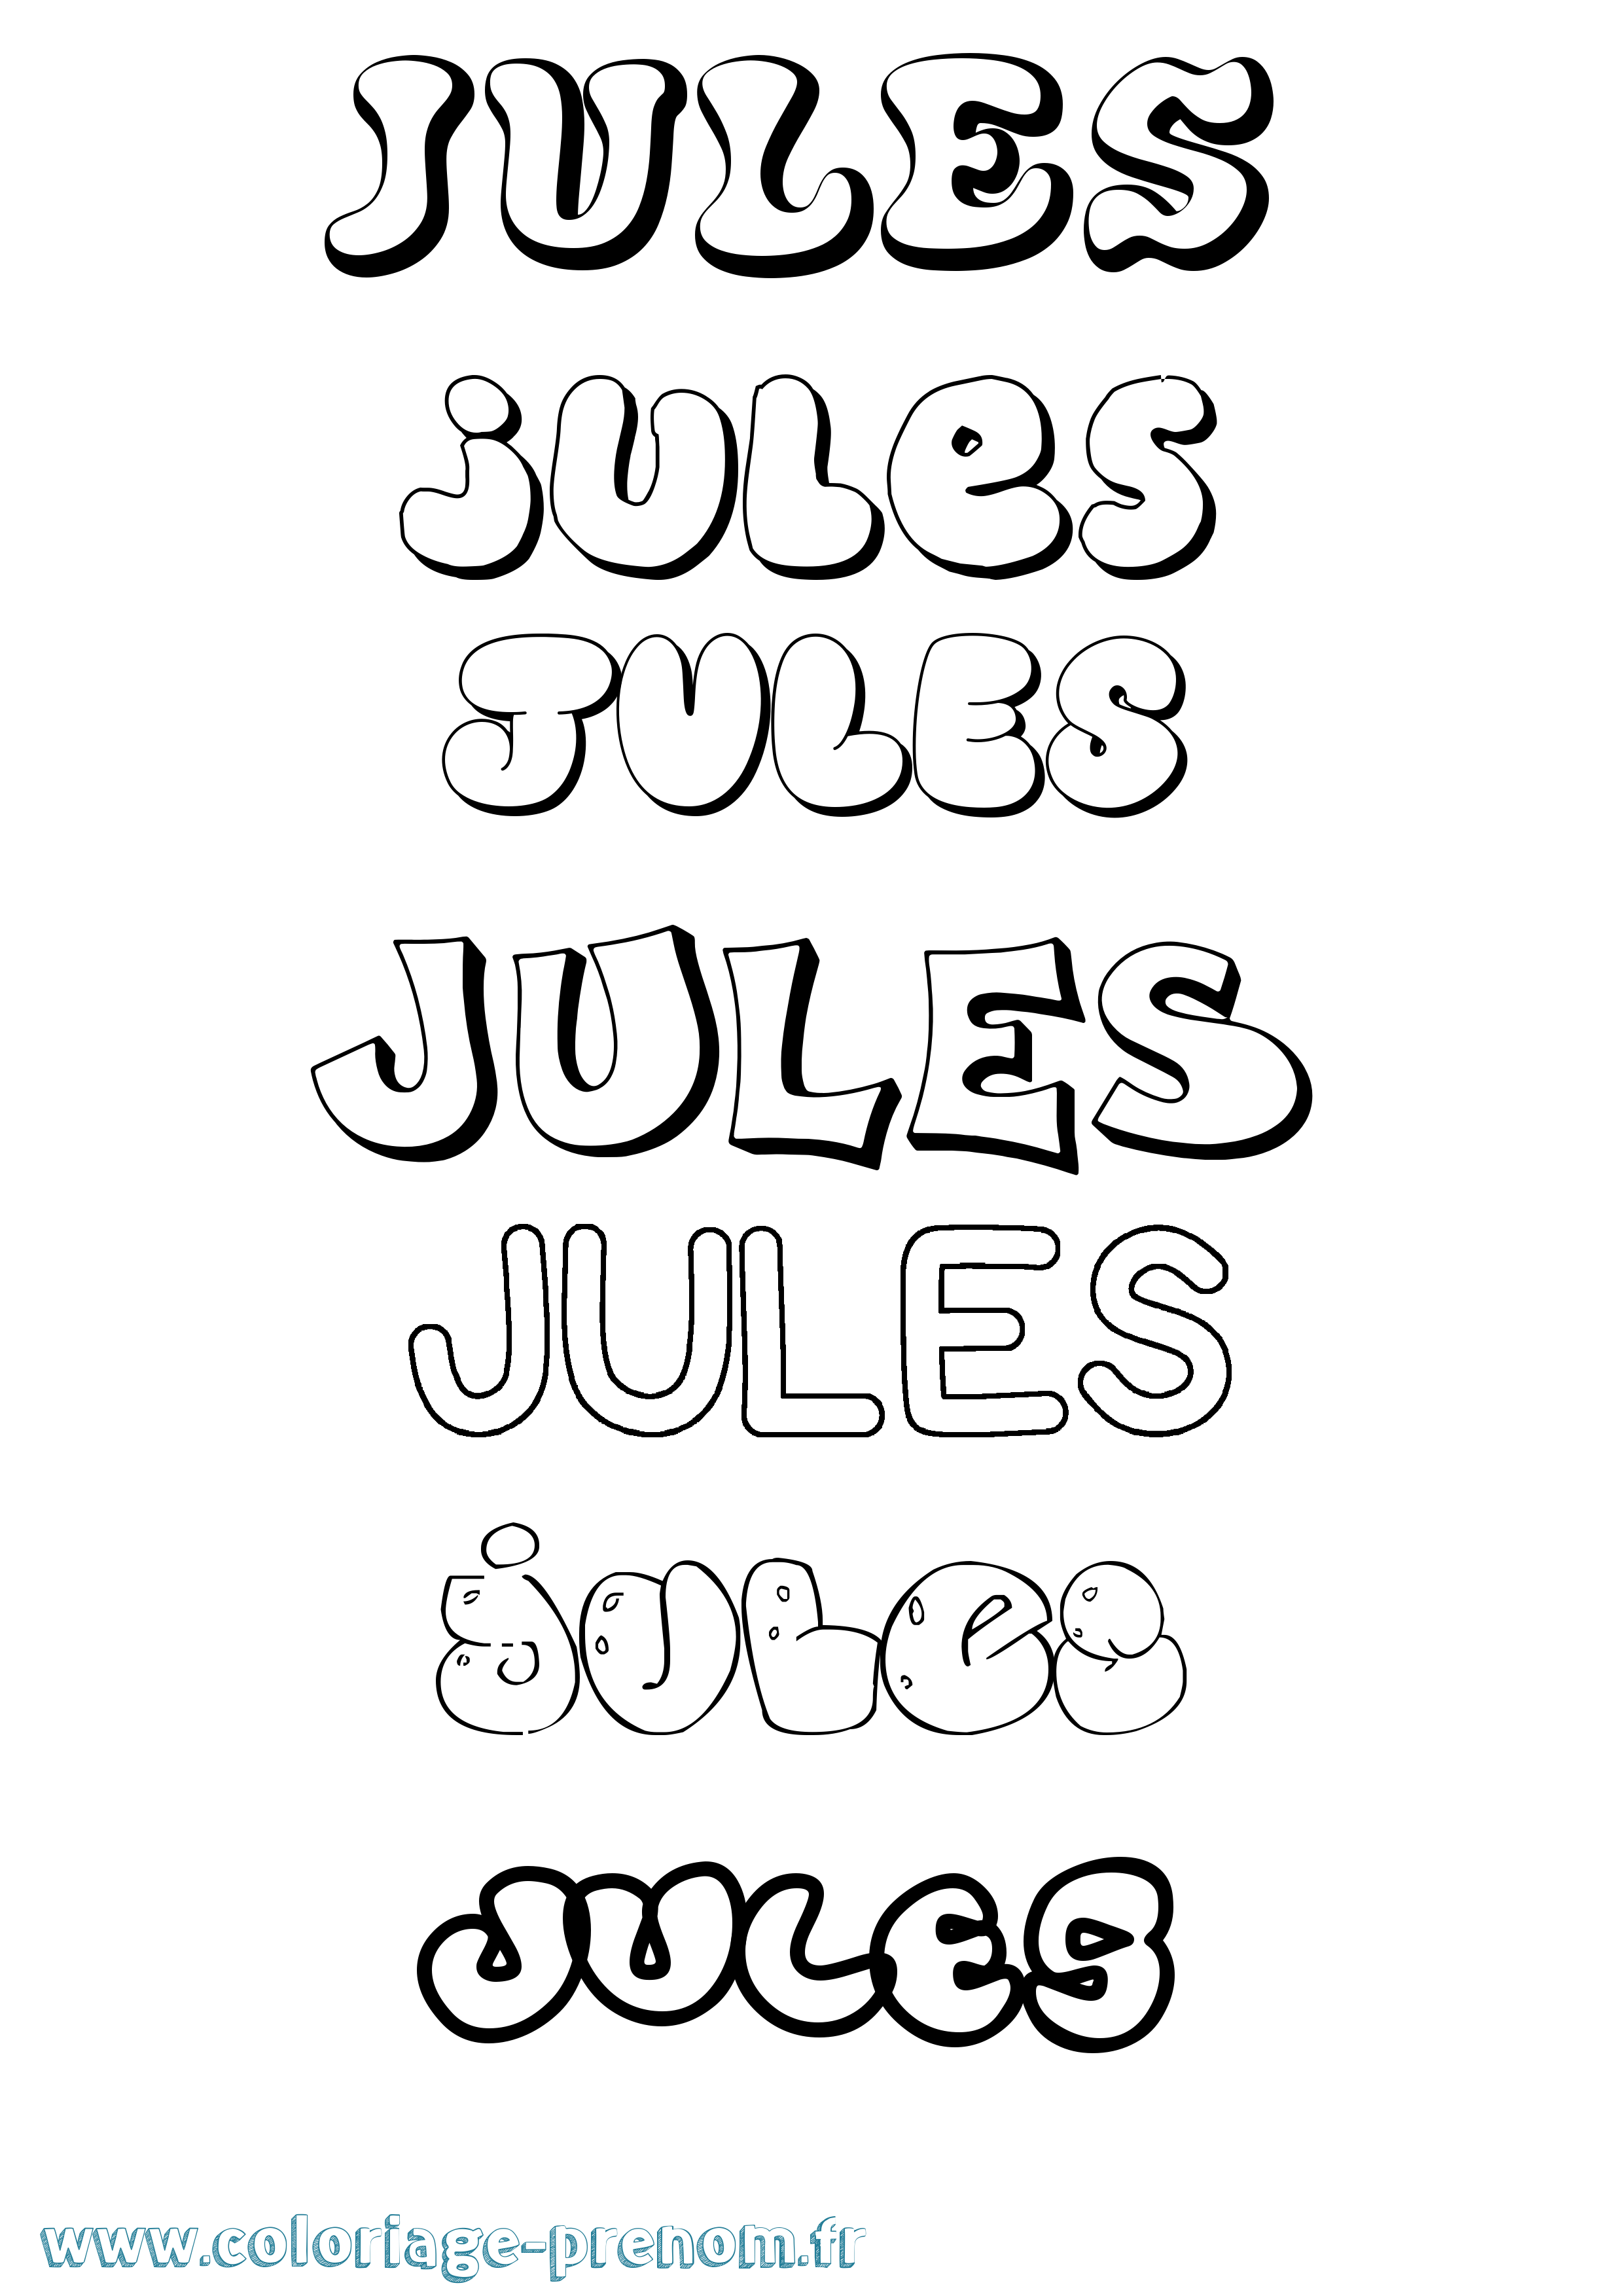 Coloriage prénom Jules